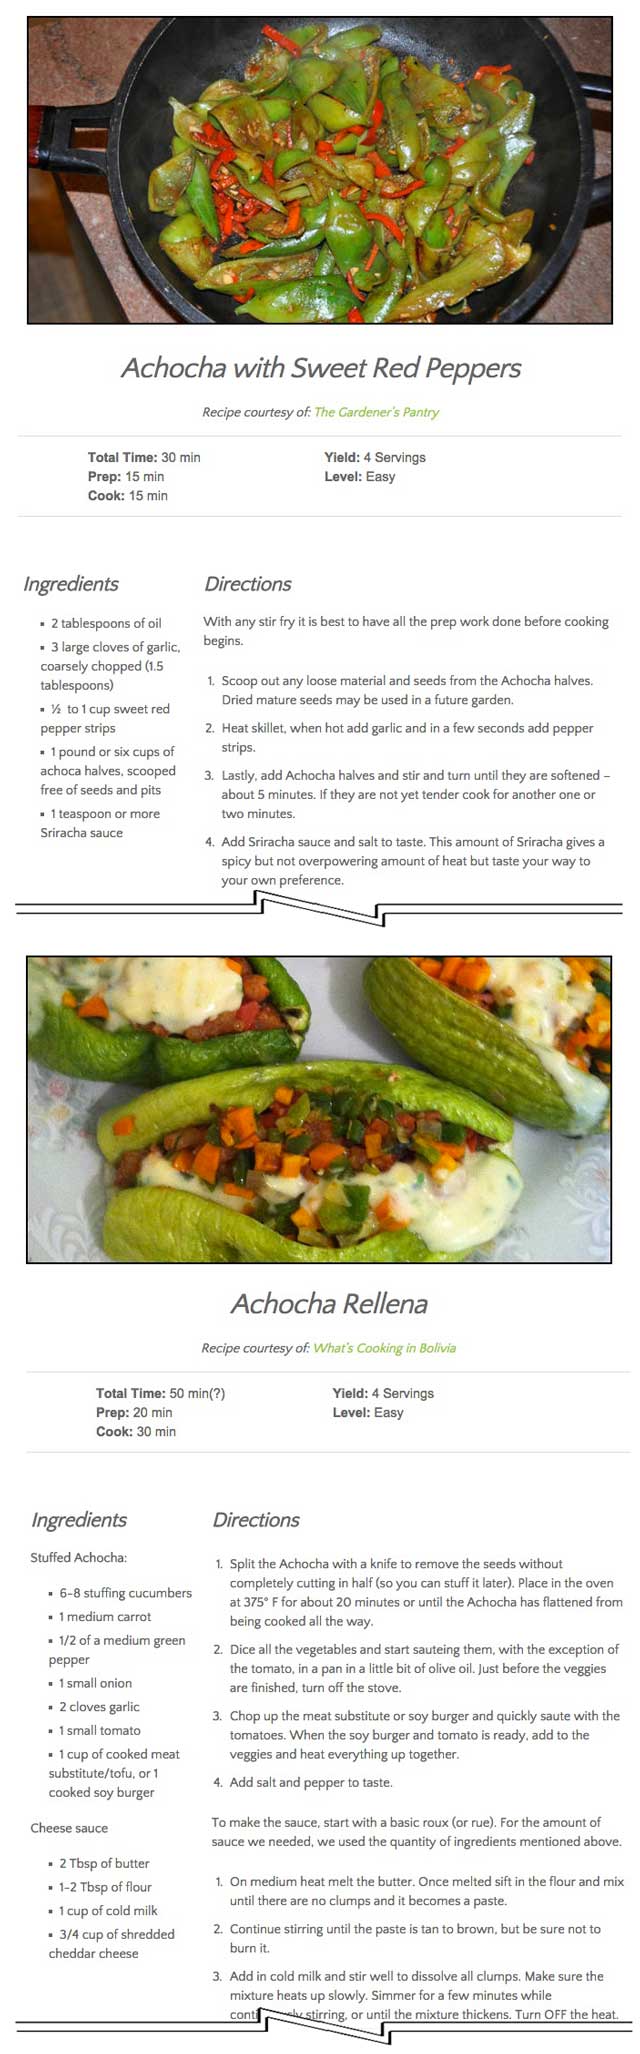 achocha recipes, One Community